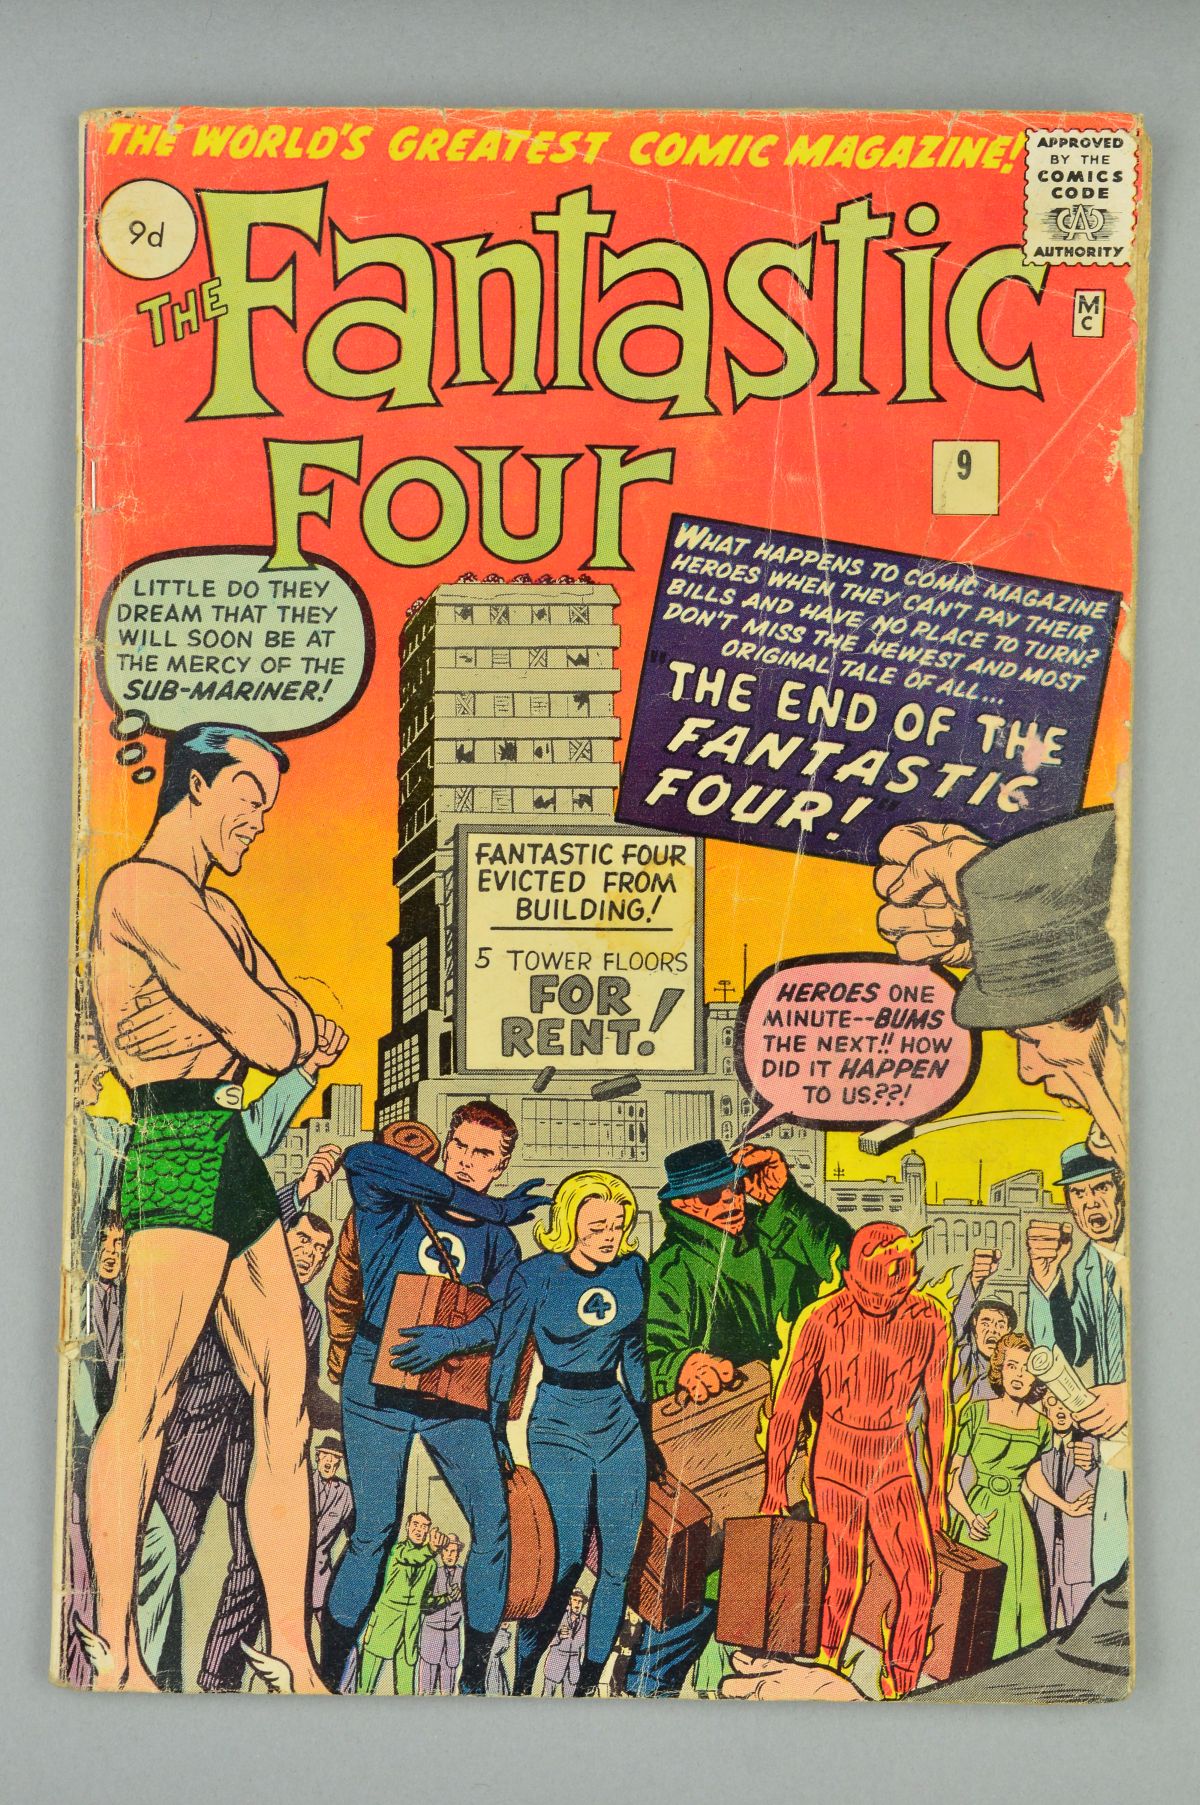 Fantastic Four (1961) #9, Published:December 01, 1962, When the Fantastic Four go bankrupt, they'